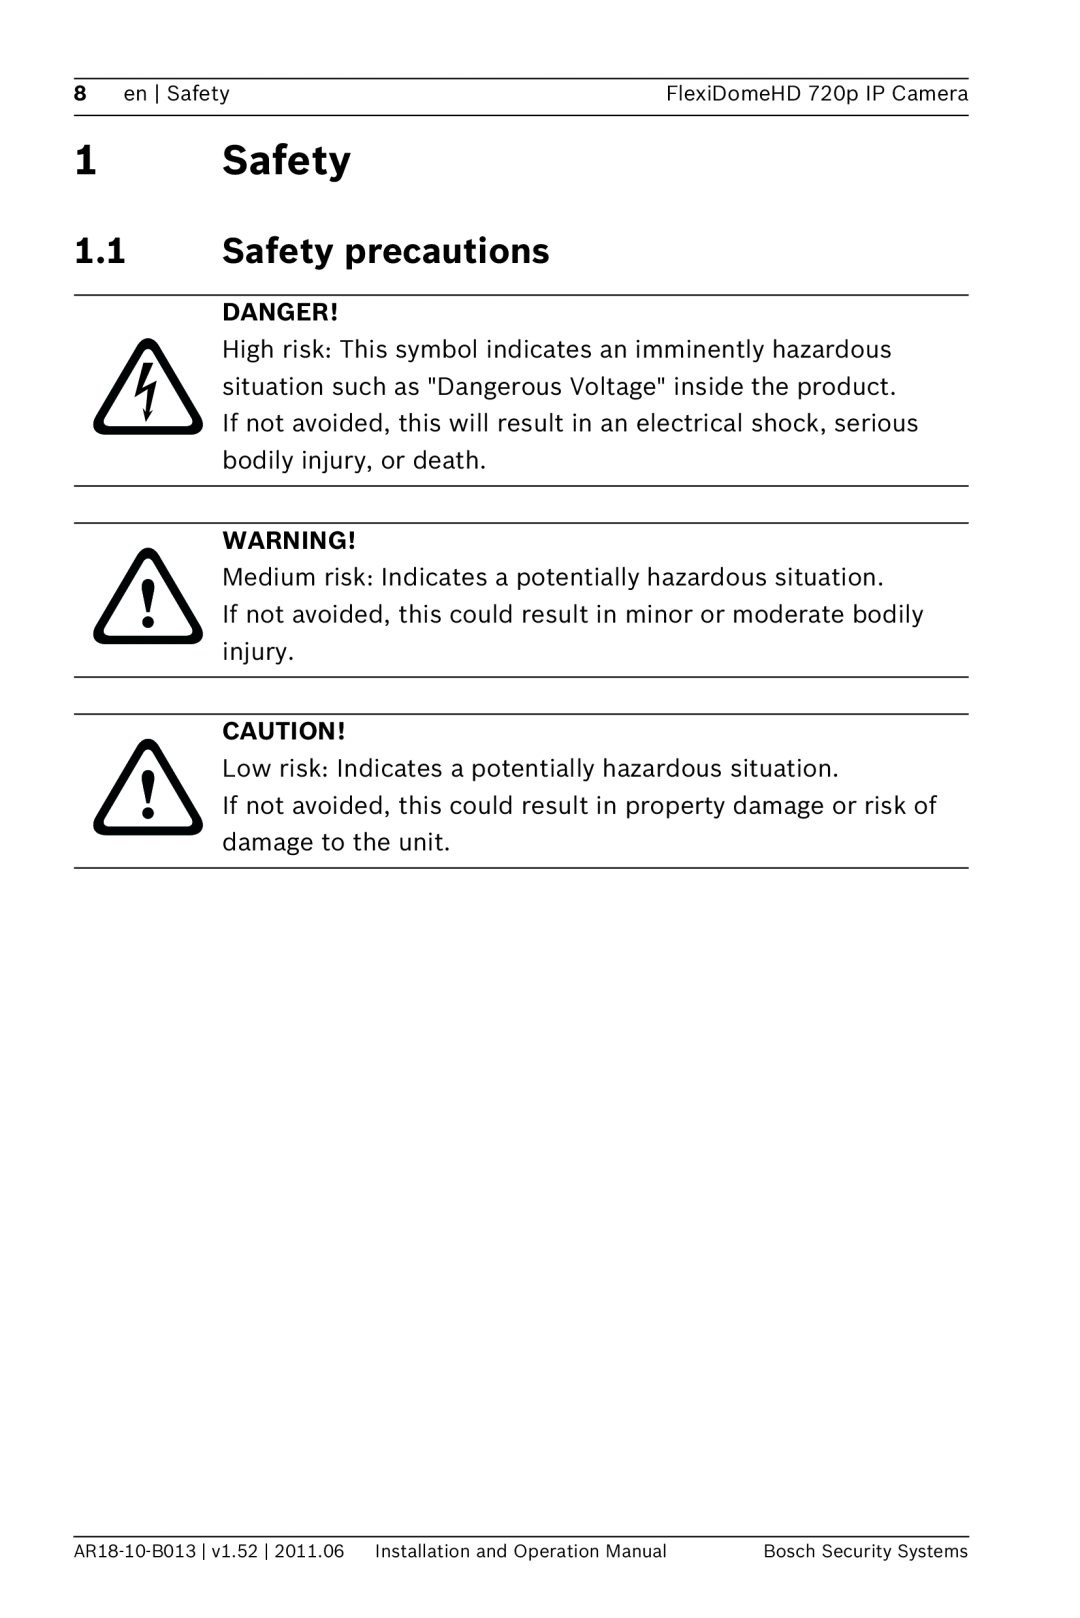 Bosch Appliances NDN-921 operation manual 1.1Safety precautions, Danger 